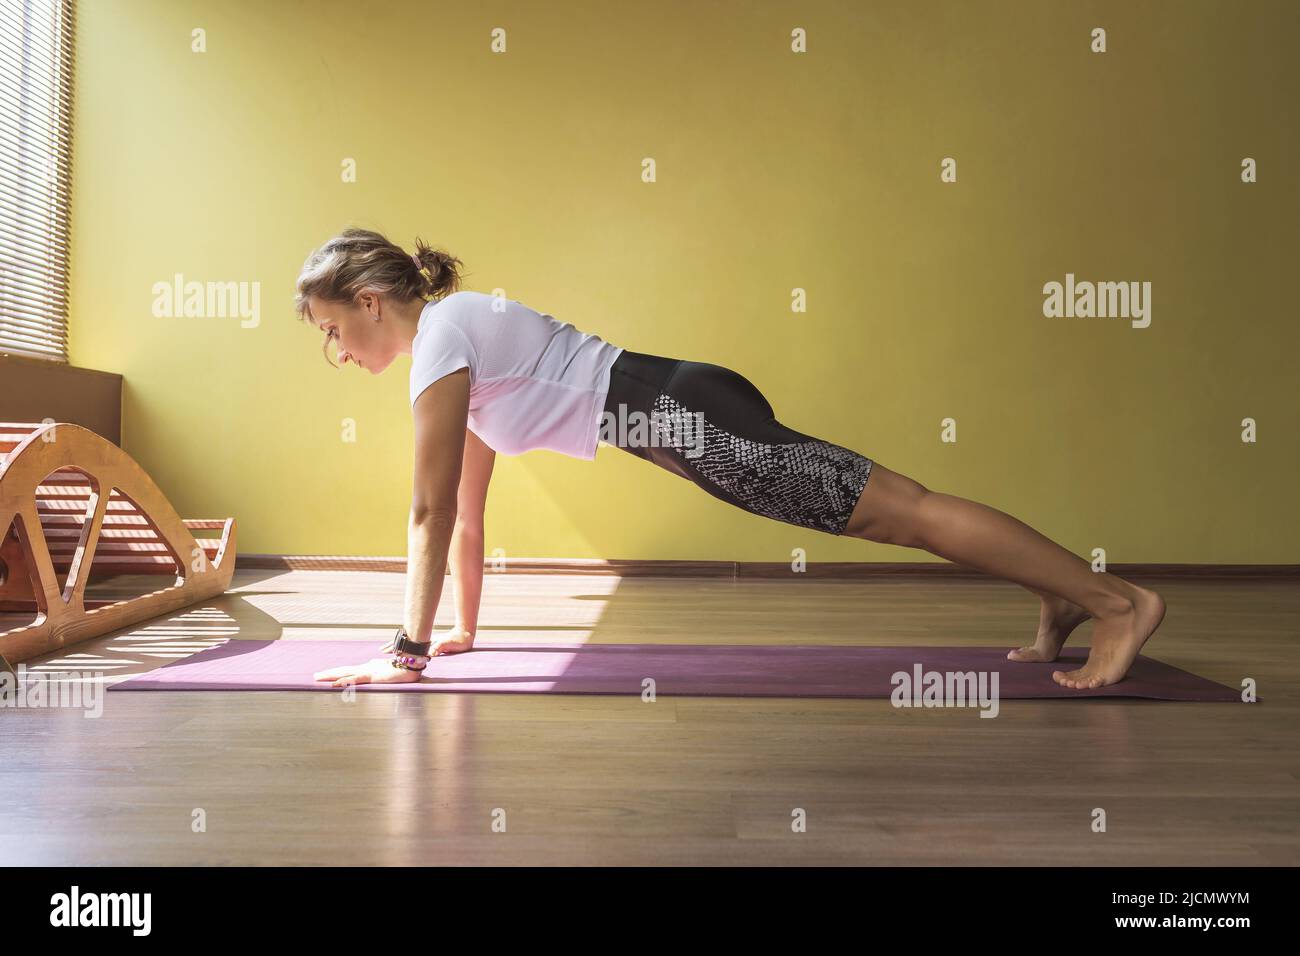 Woman in sportswear practicing yoga doing kumbhakasana exercise, plank pose, exercising on mat in room Stock Photo